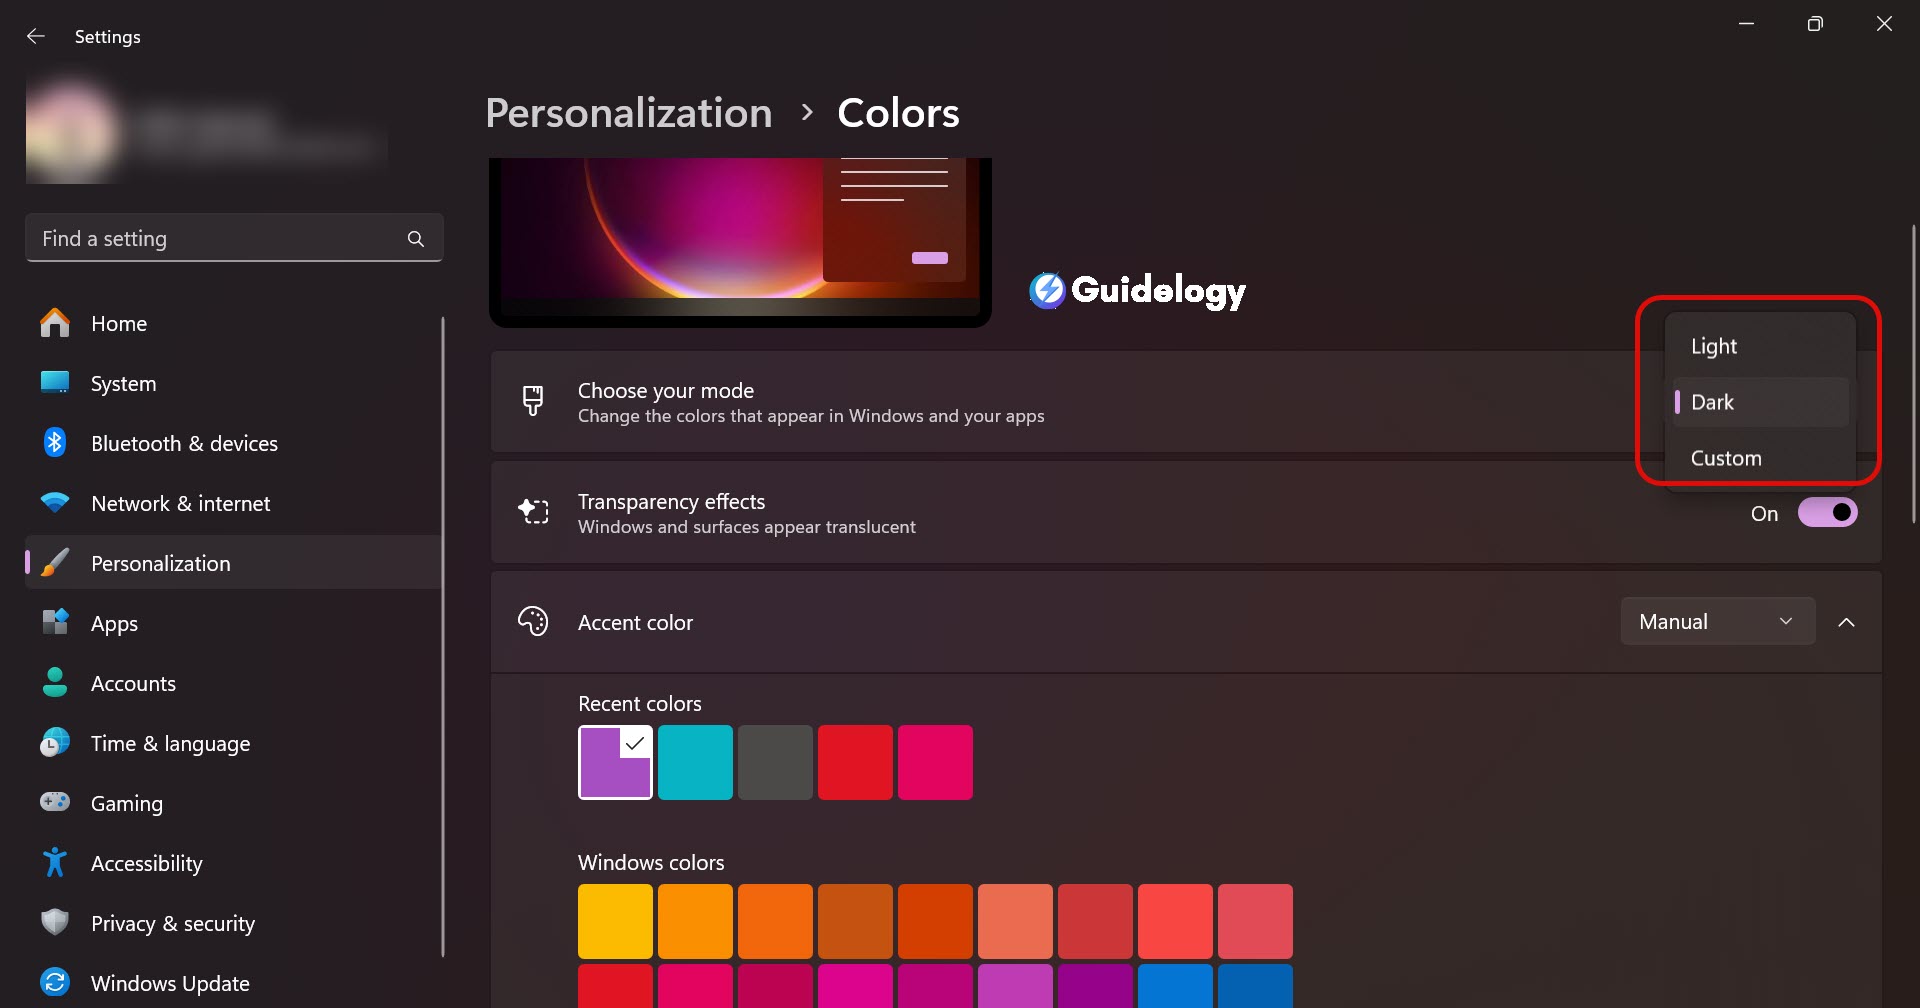 Change Taskbar Color in Windows 11